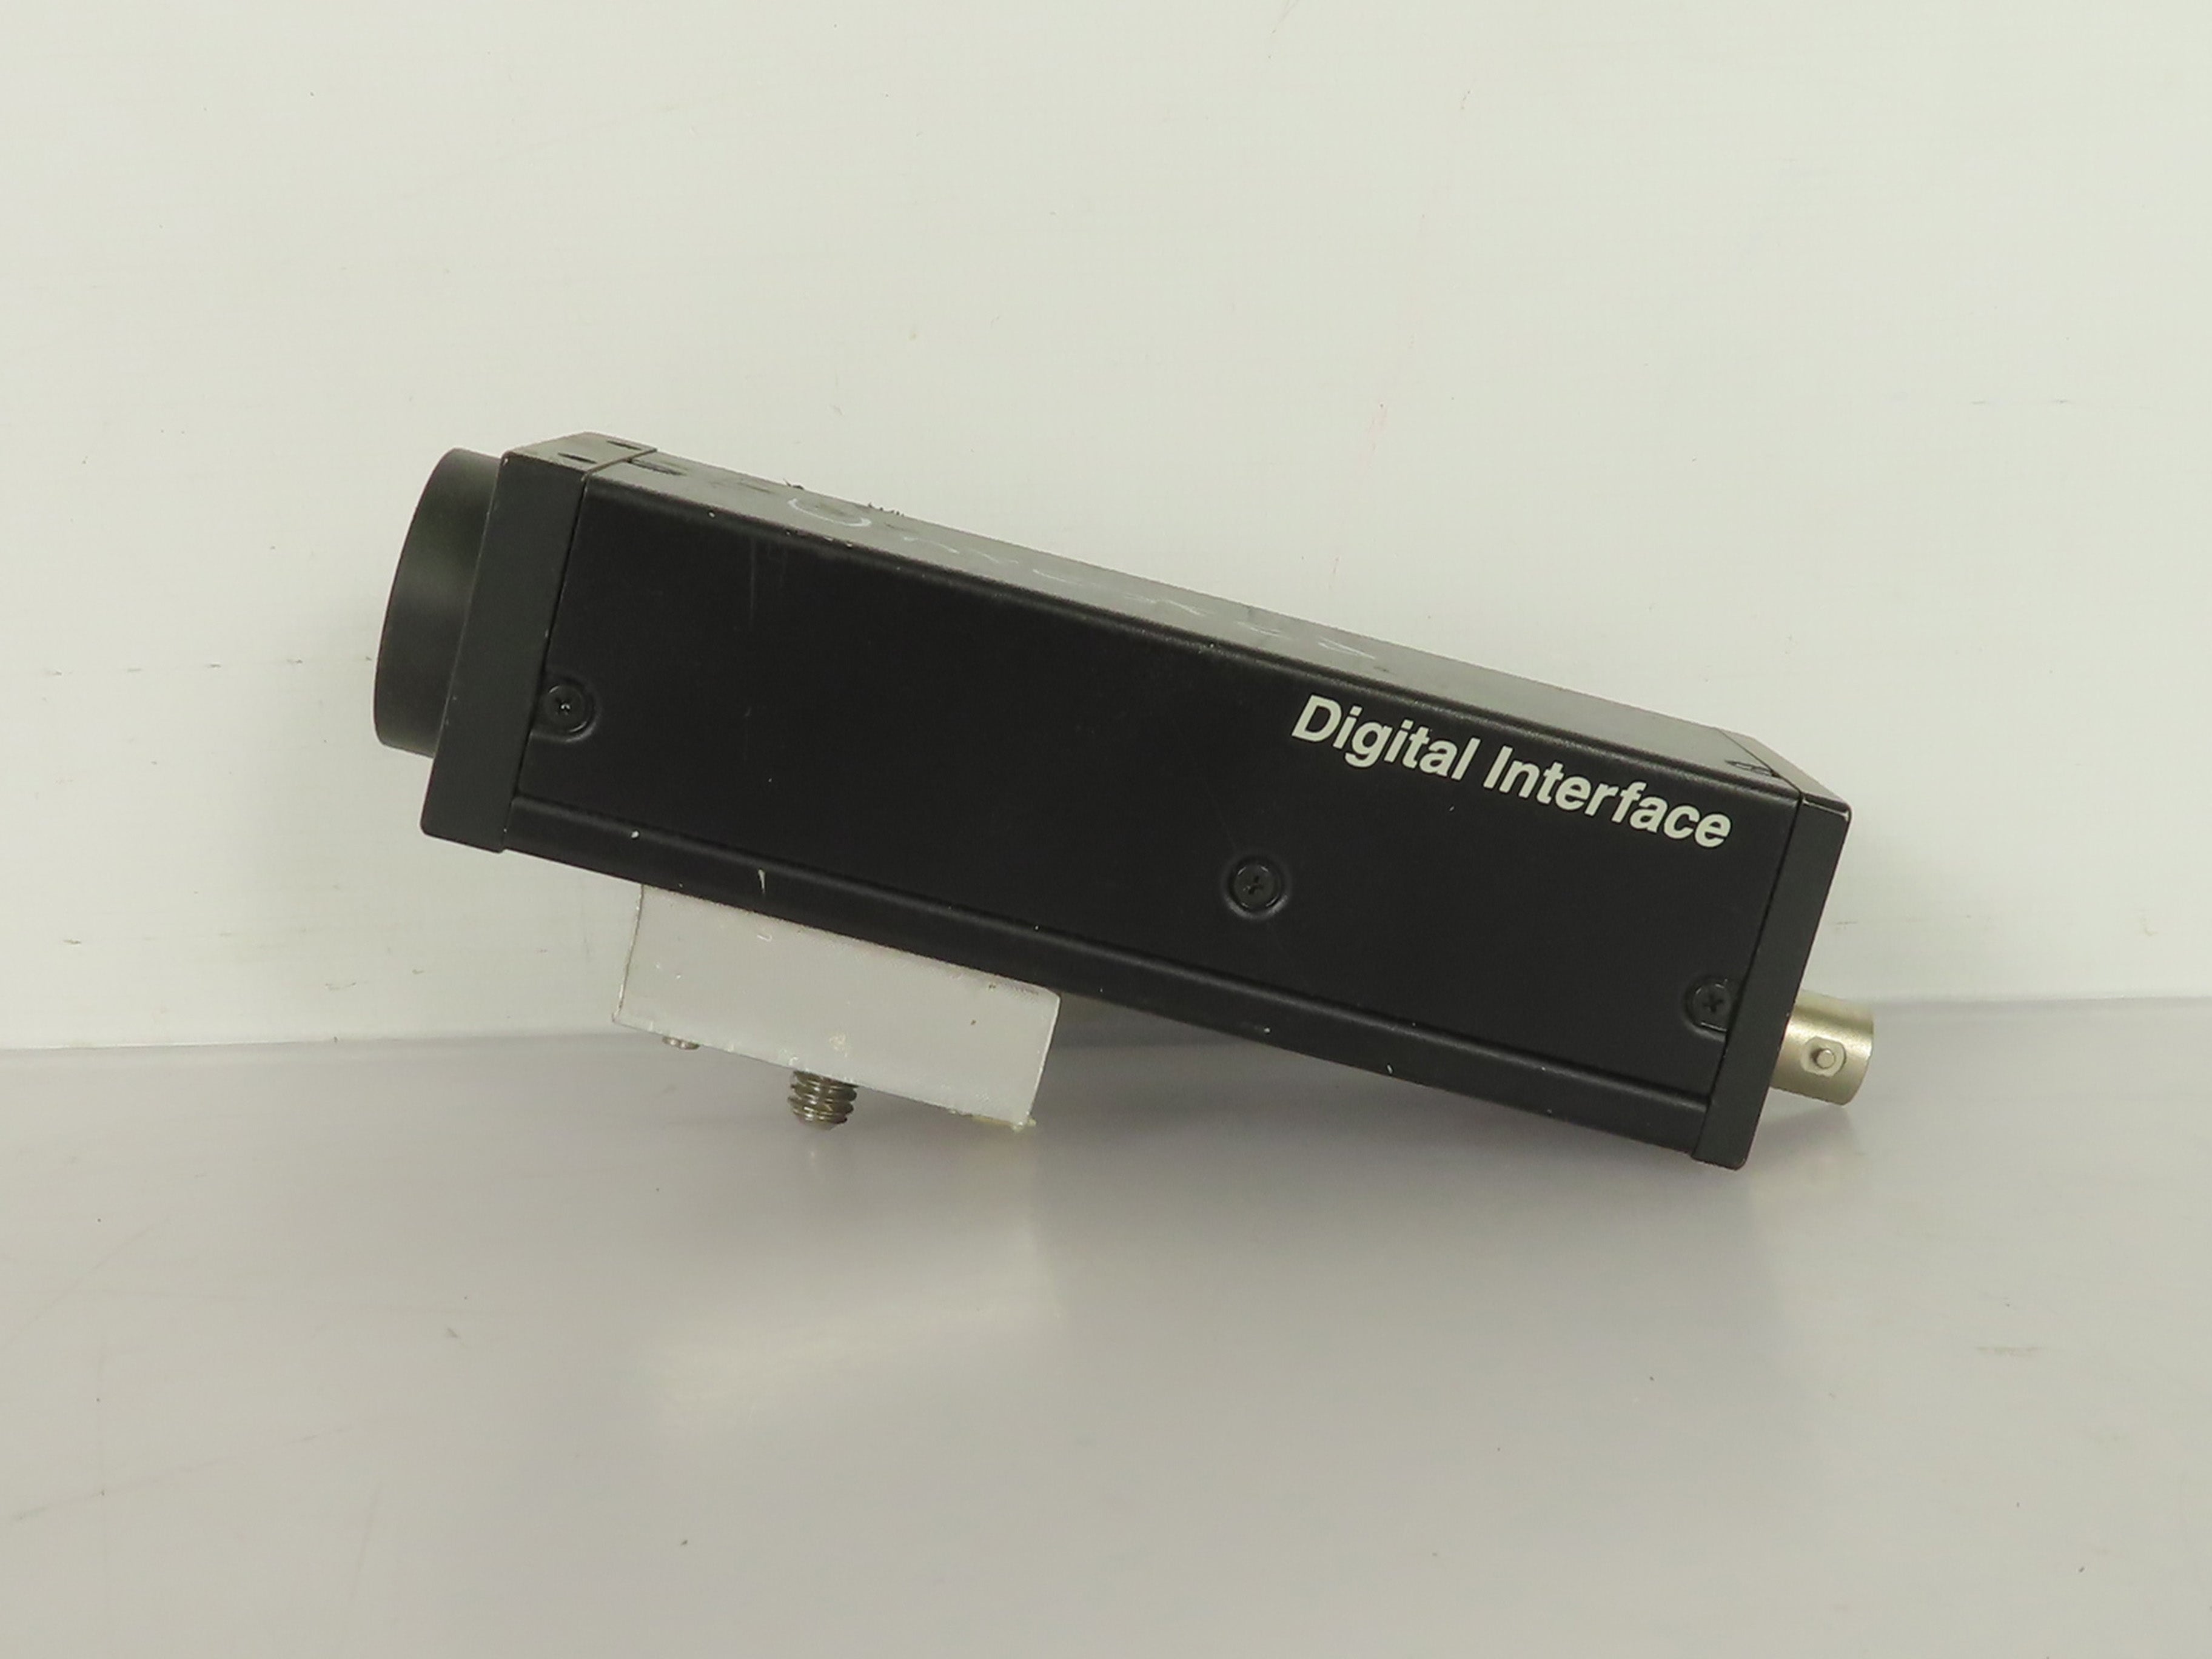 Sony XCD-X710 Industrial Digital Interface Camera